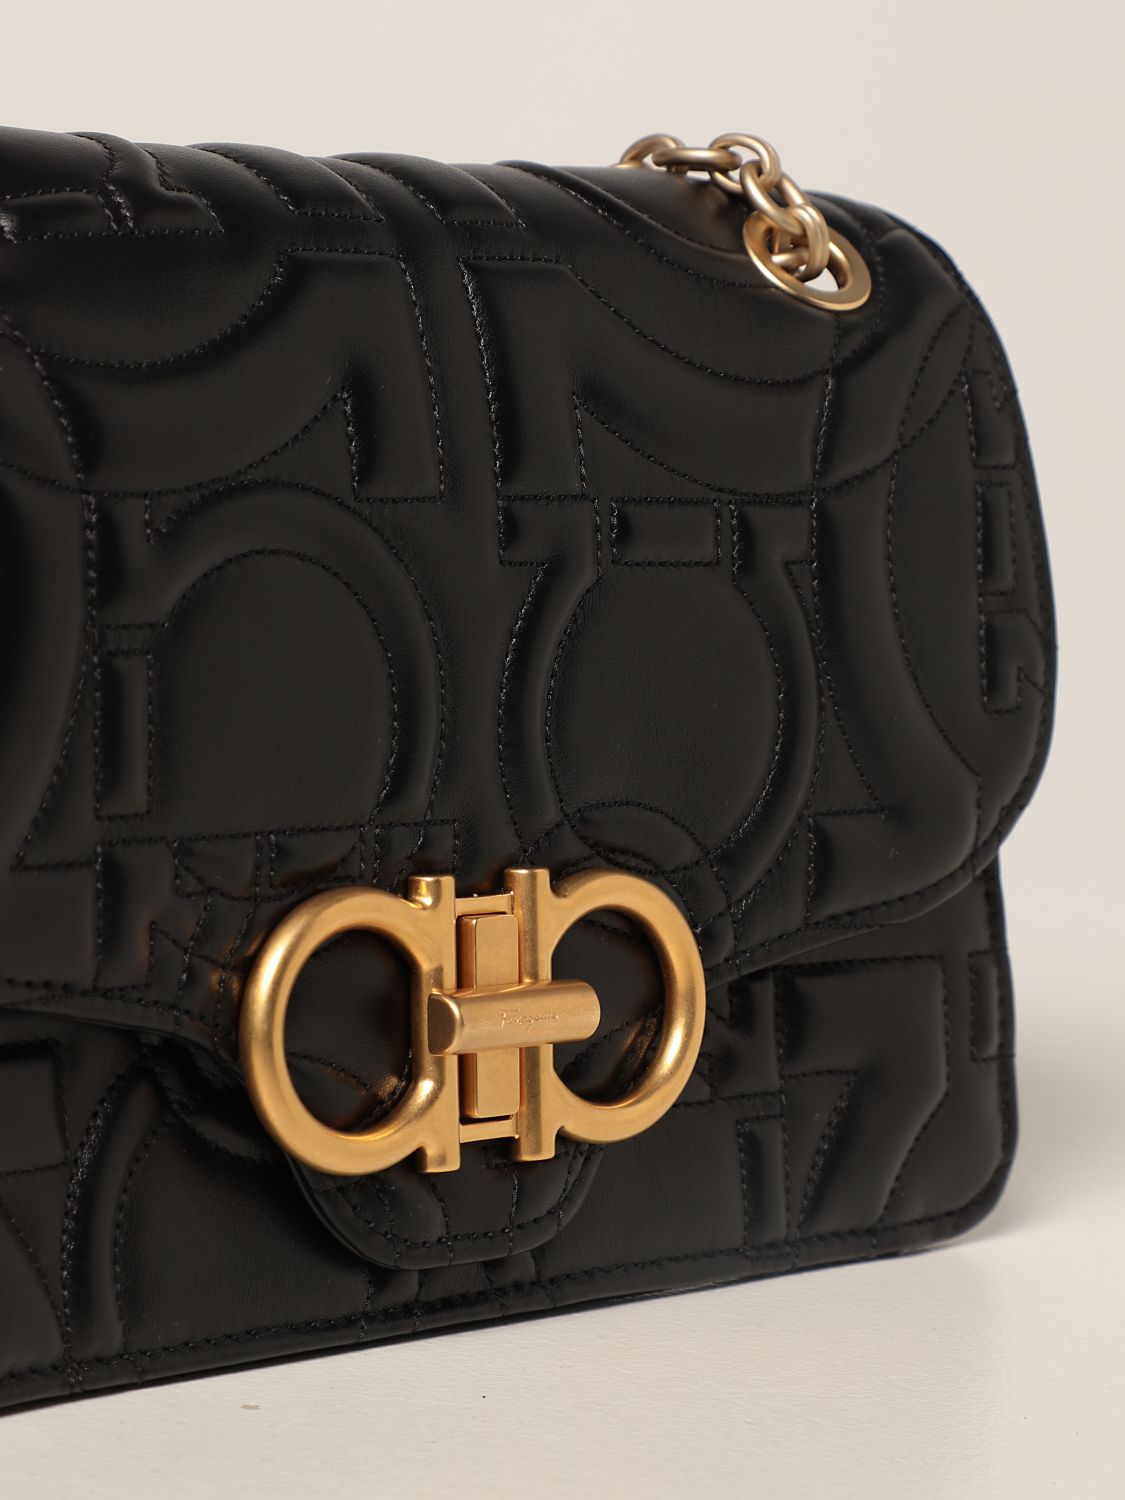 FERRAGAMO: Gancini bag in quilted leather - Black  Ferragamo crossbody  bags 21H168 696053 online at